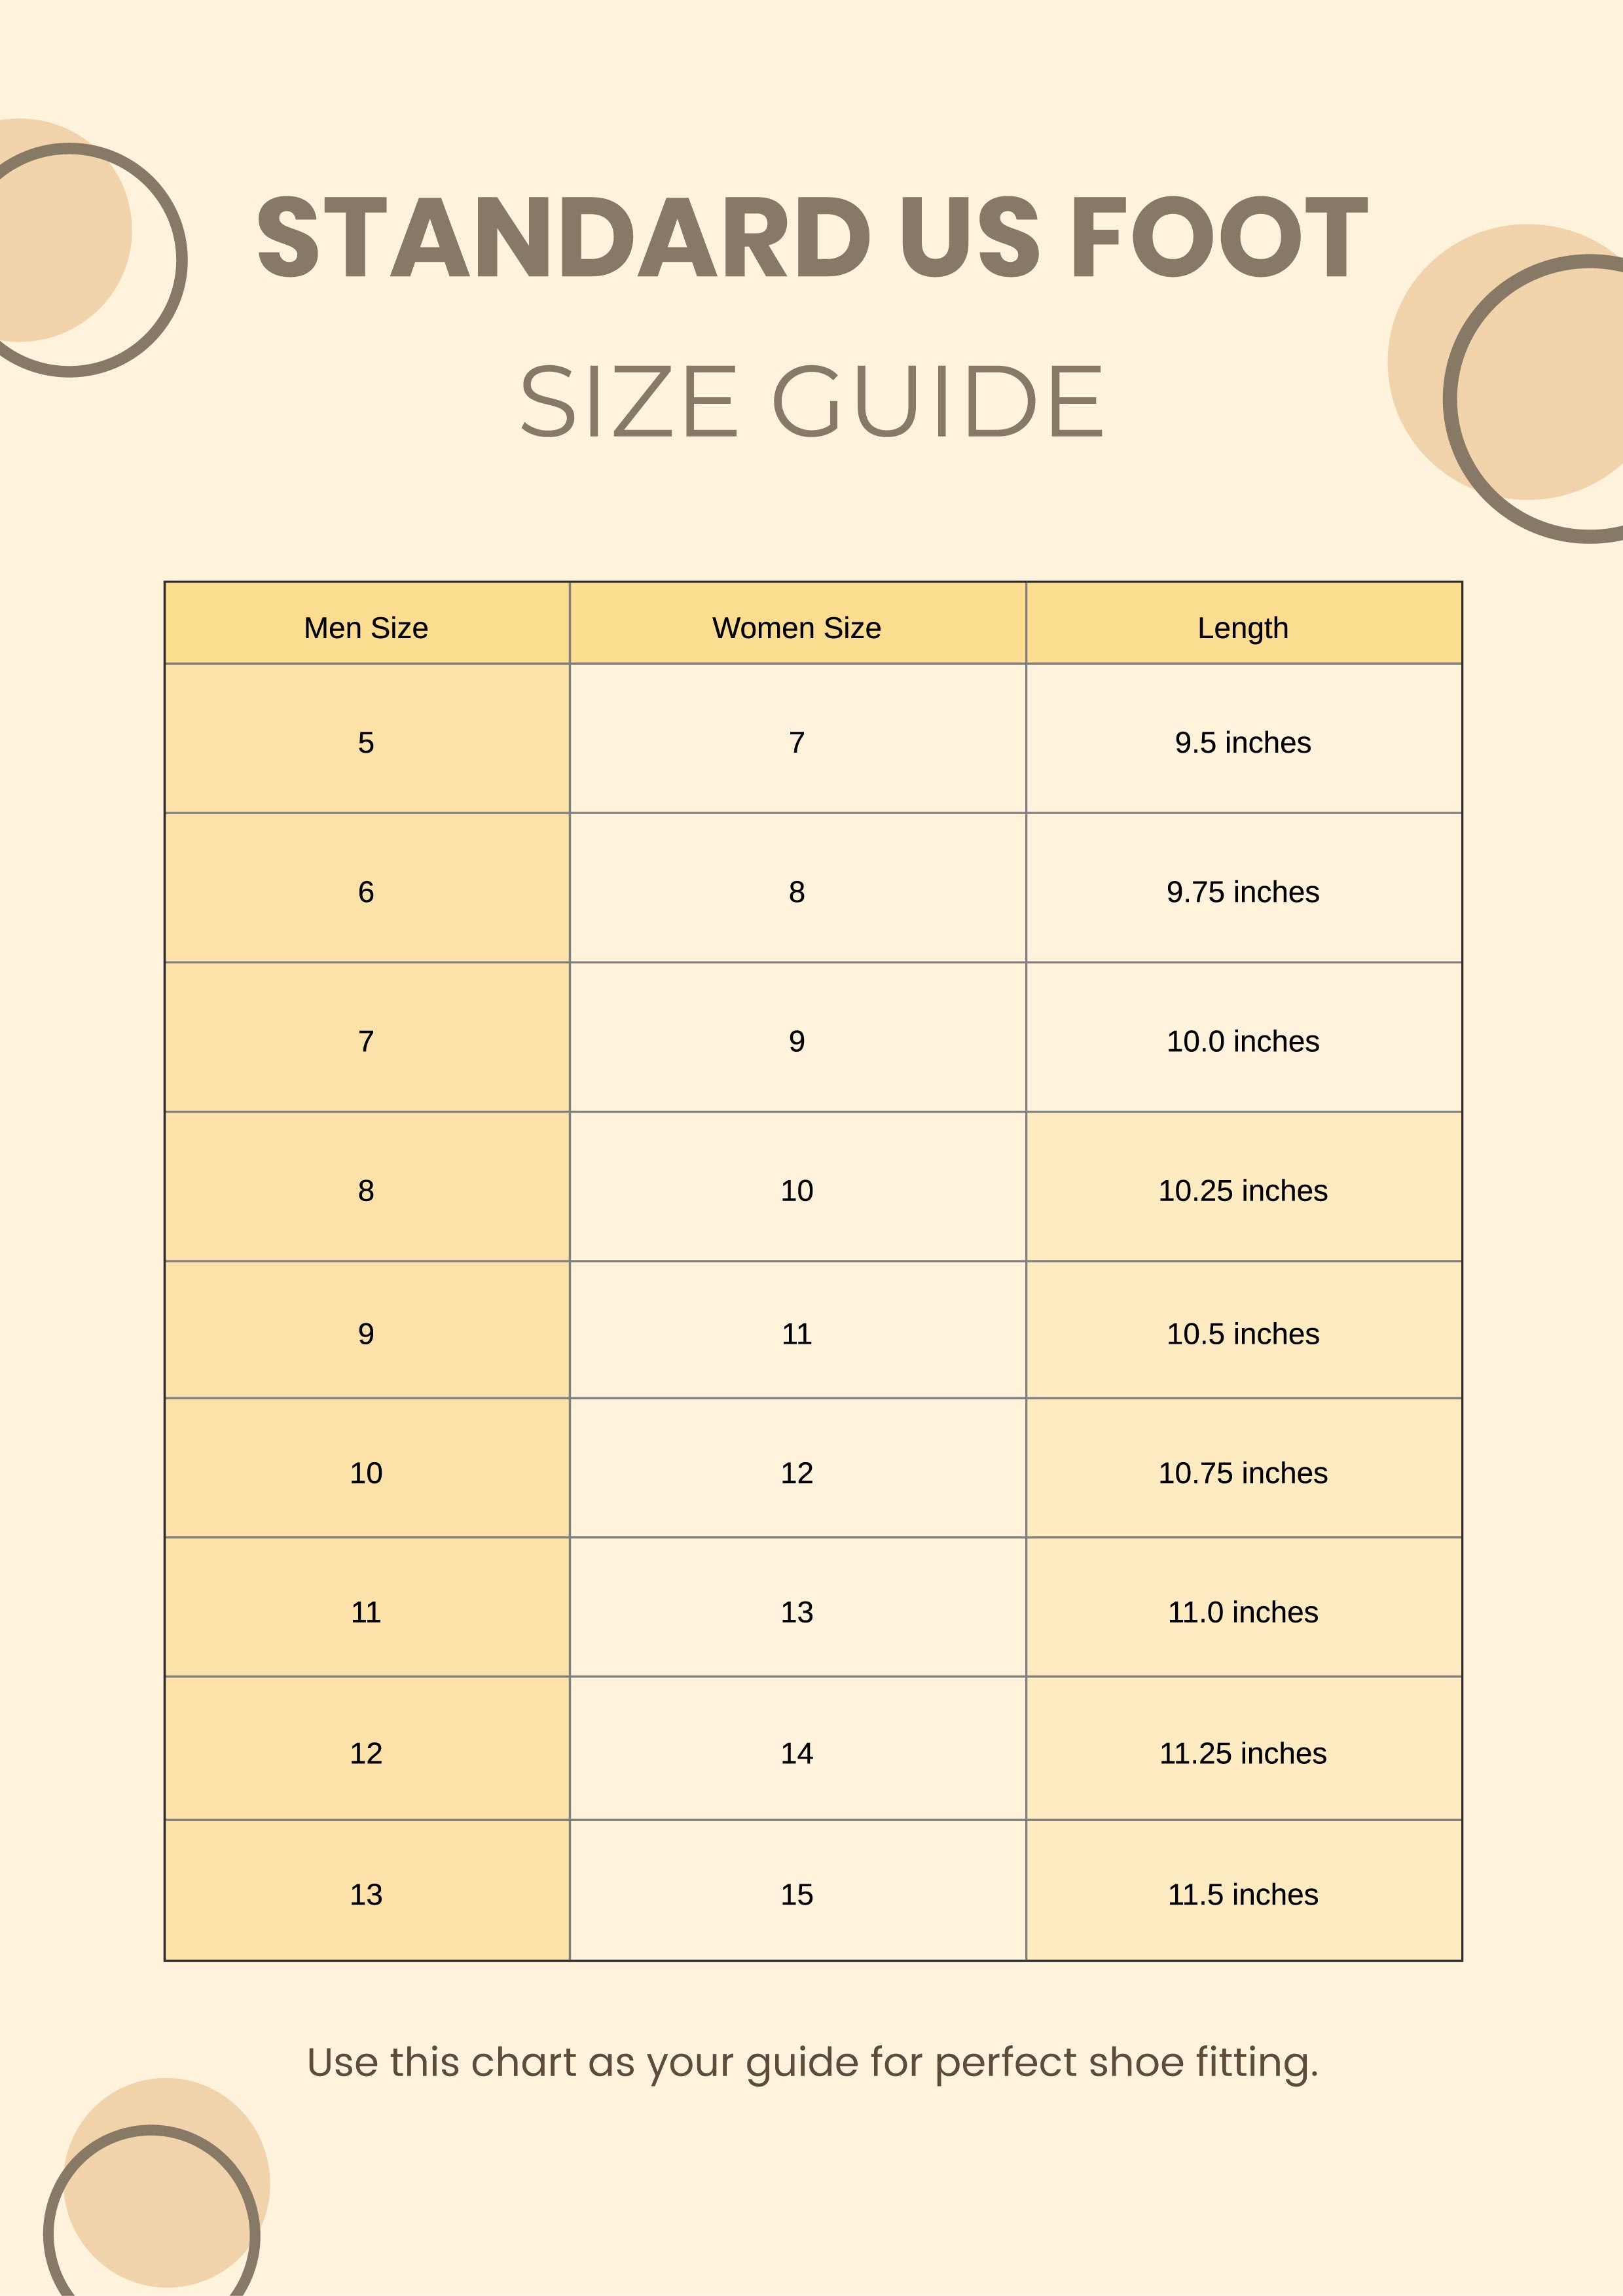 Free Uk Foot Size Chart - Download in PDF, Illustrator